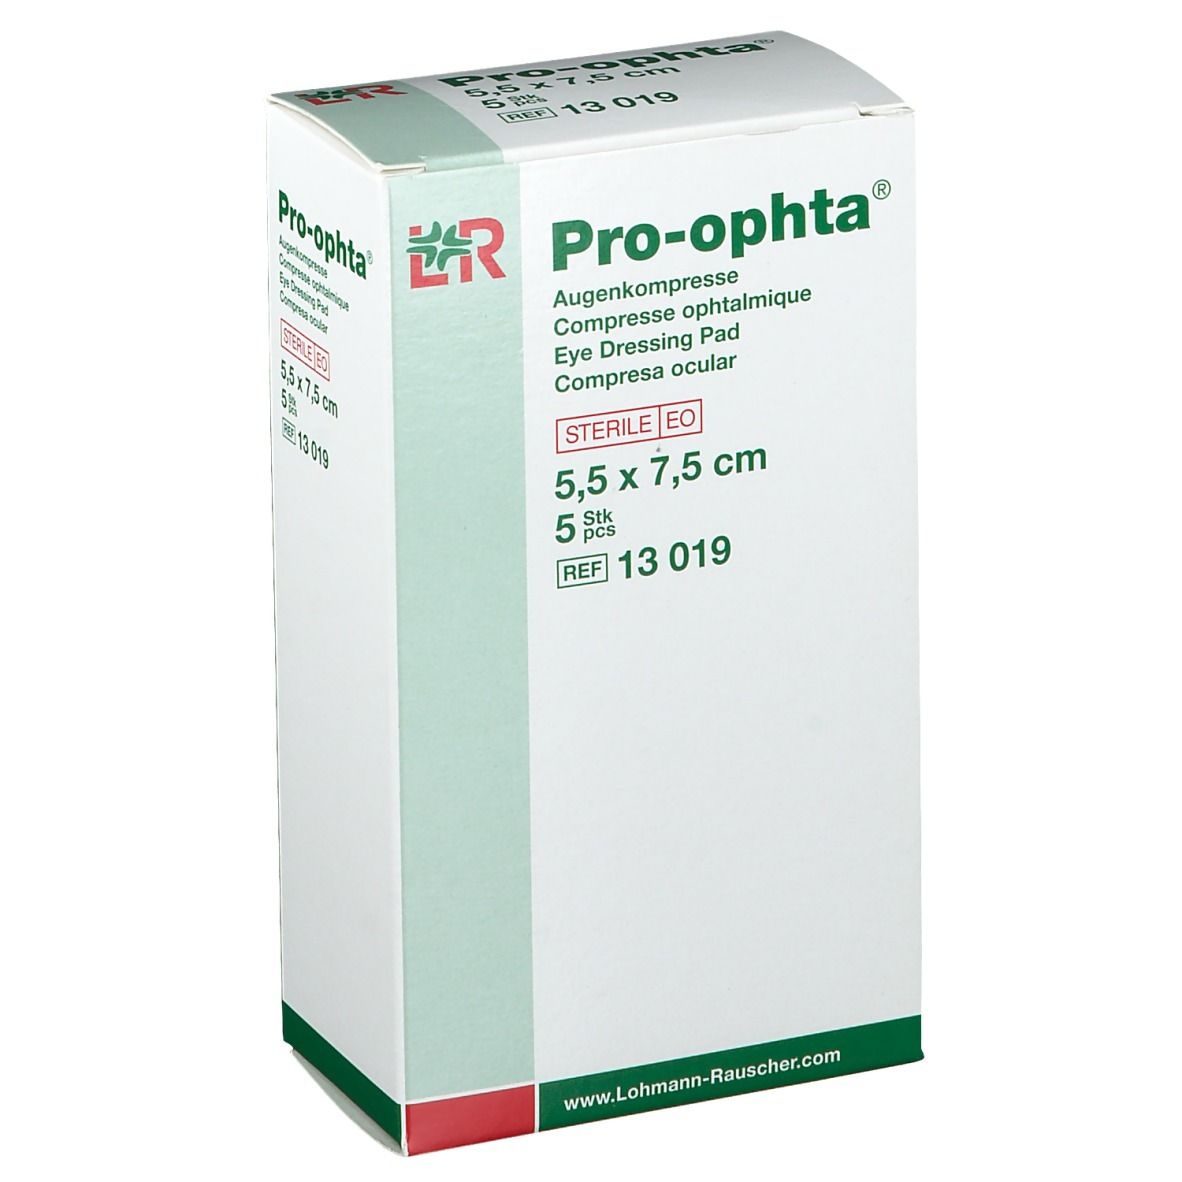 Pro-ophta® Augenkompresse 5,5 cm x 7,5 cm steril